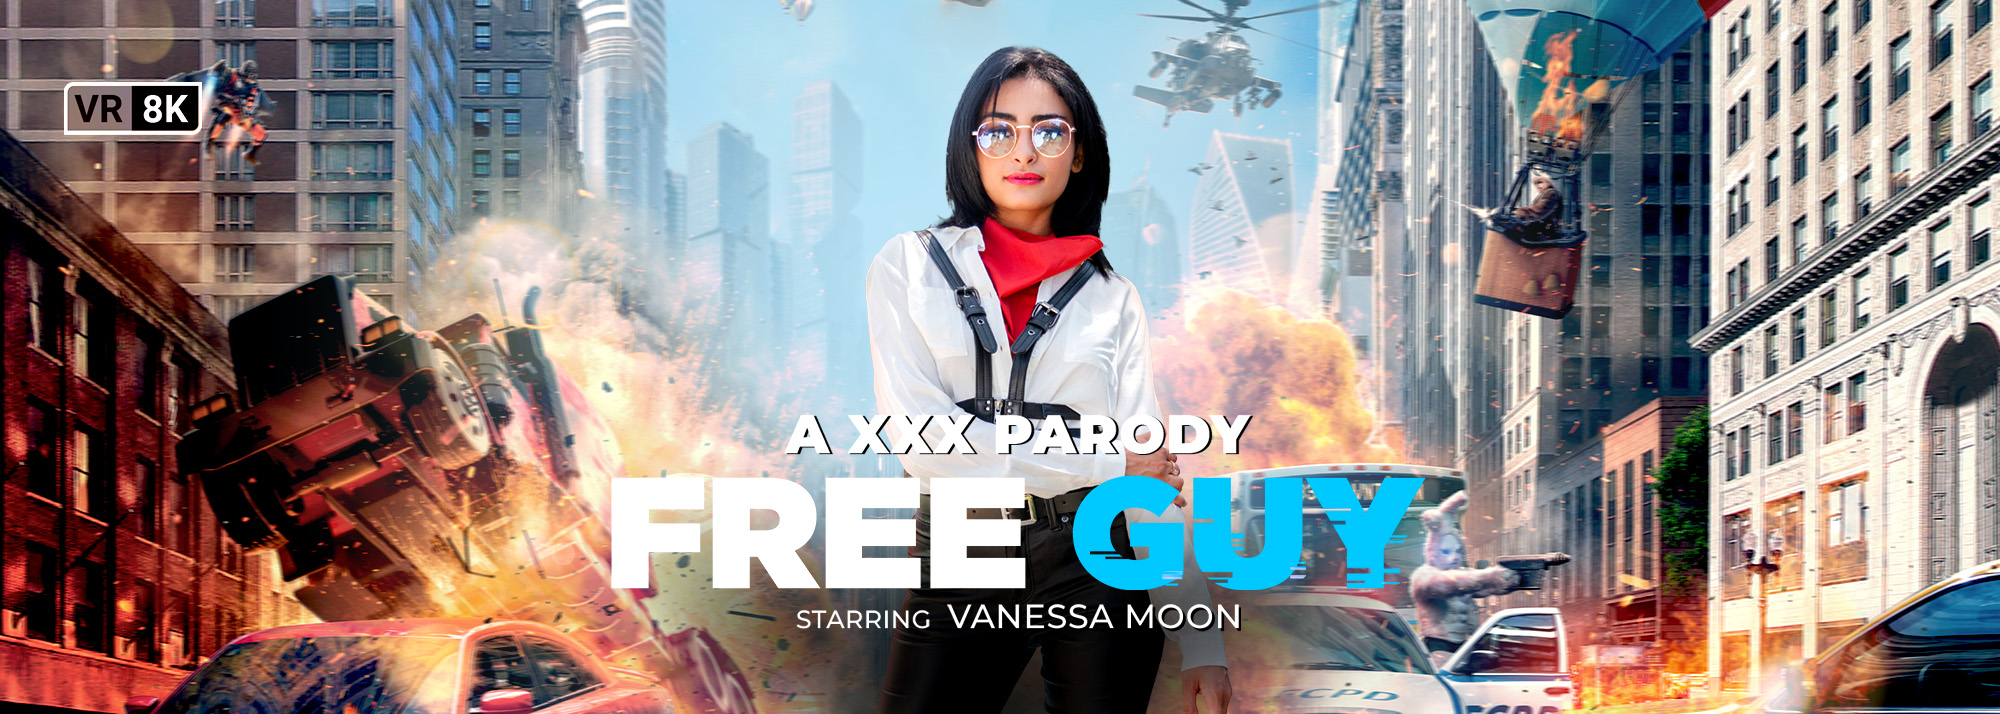 Free Guy (A XXX Parody) - VR Porn Video, Starring Vanessa Moon VR